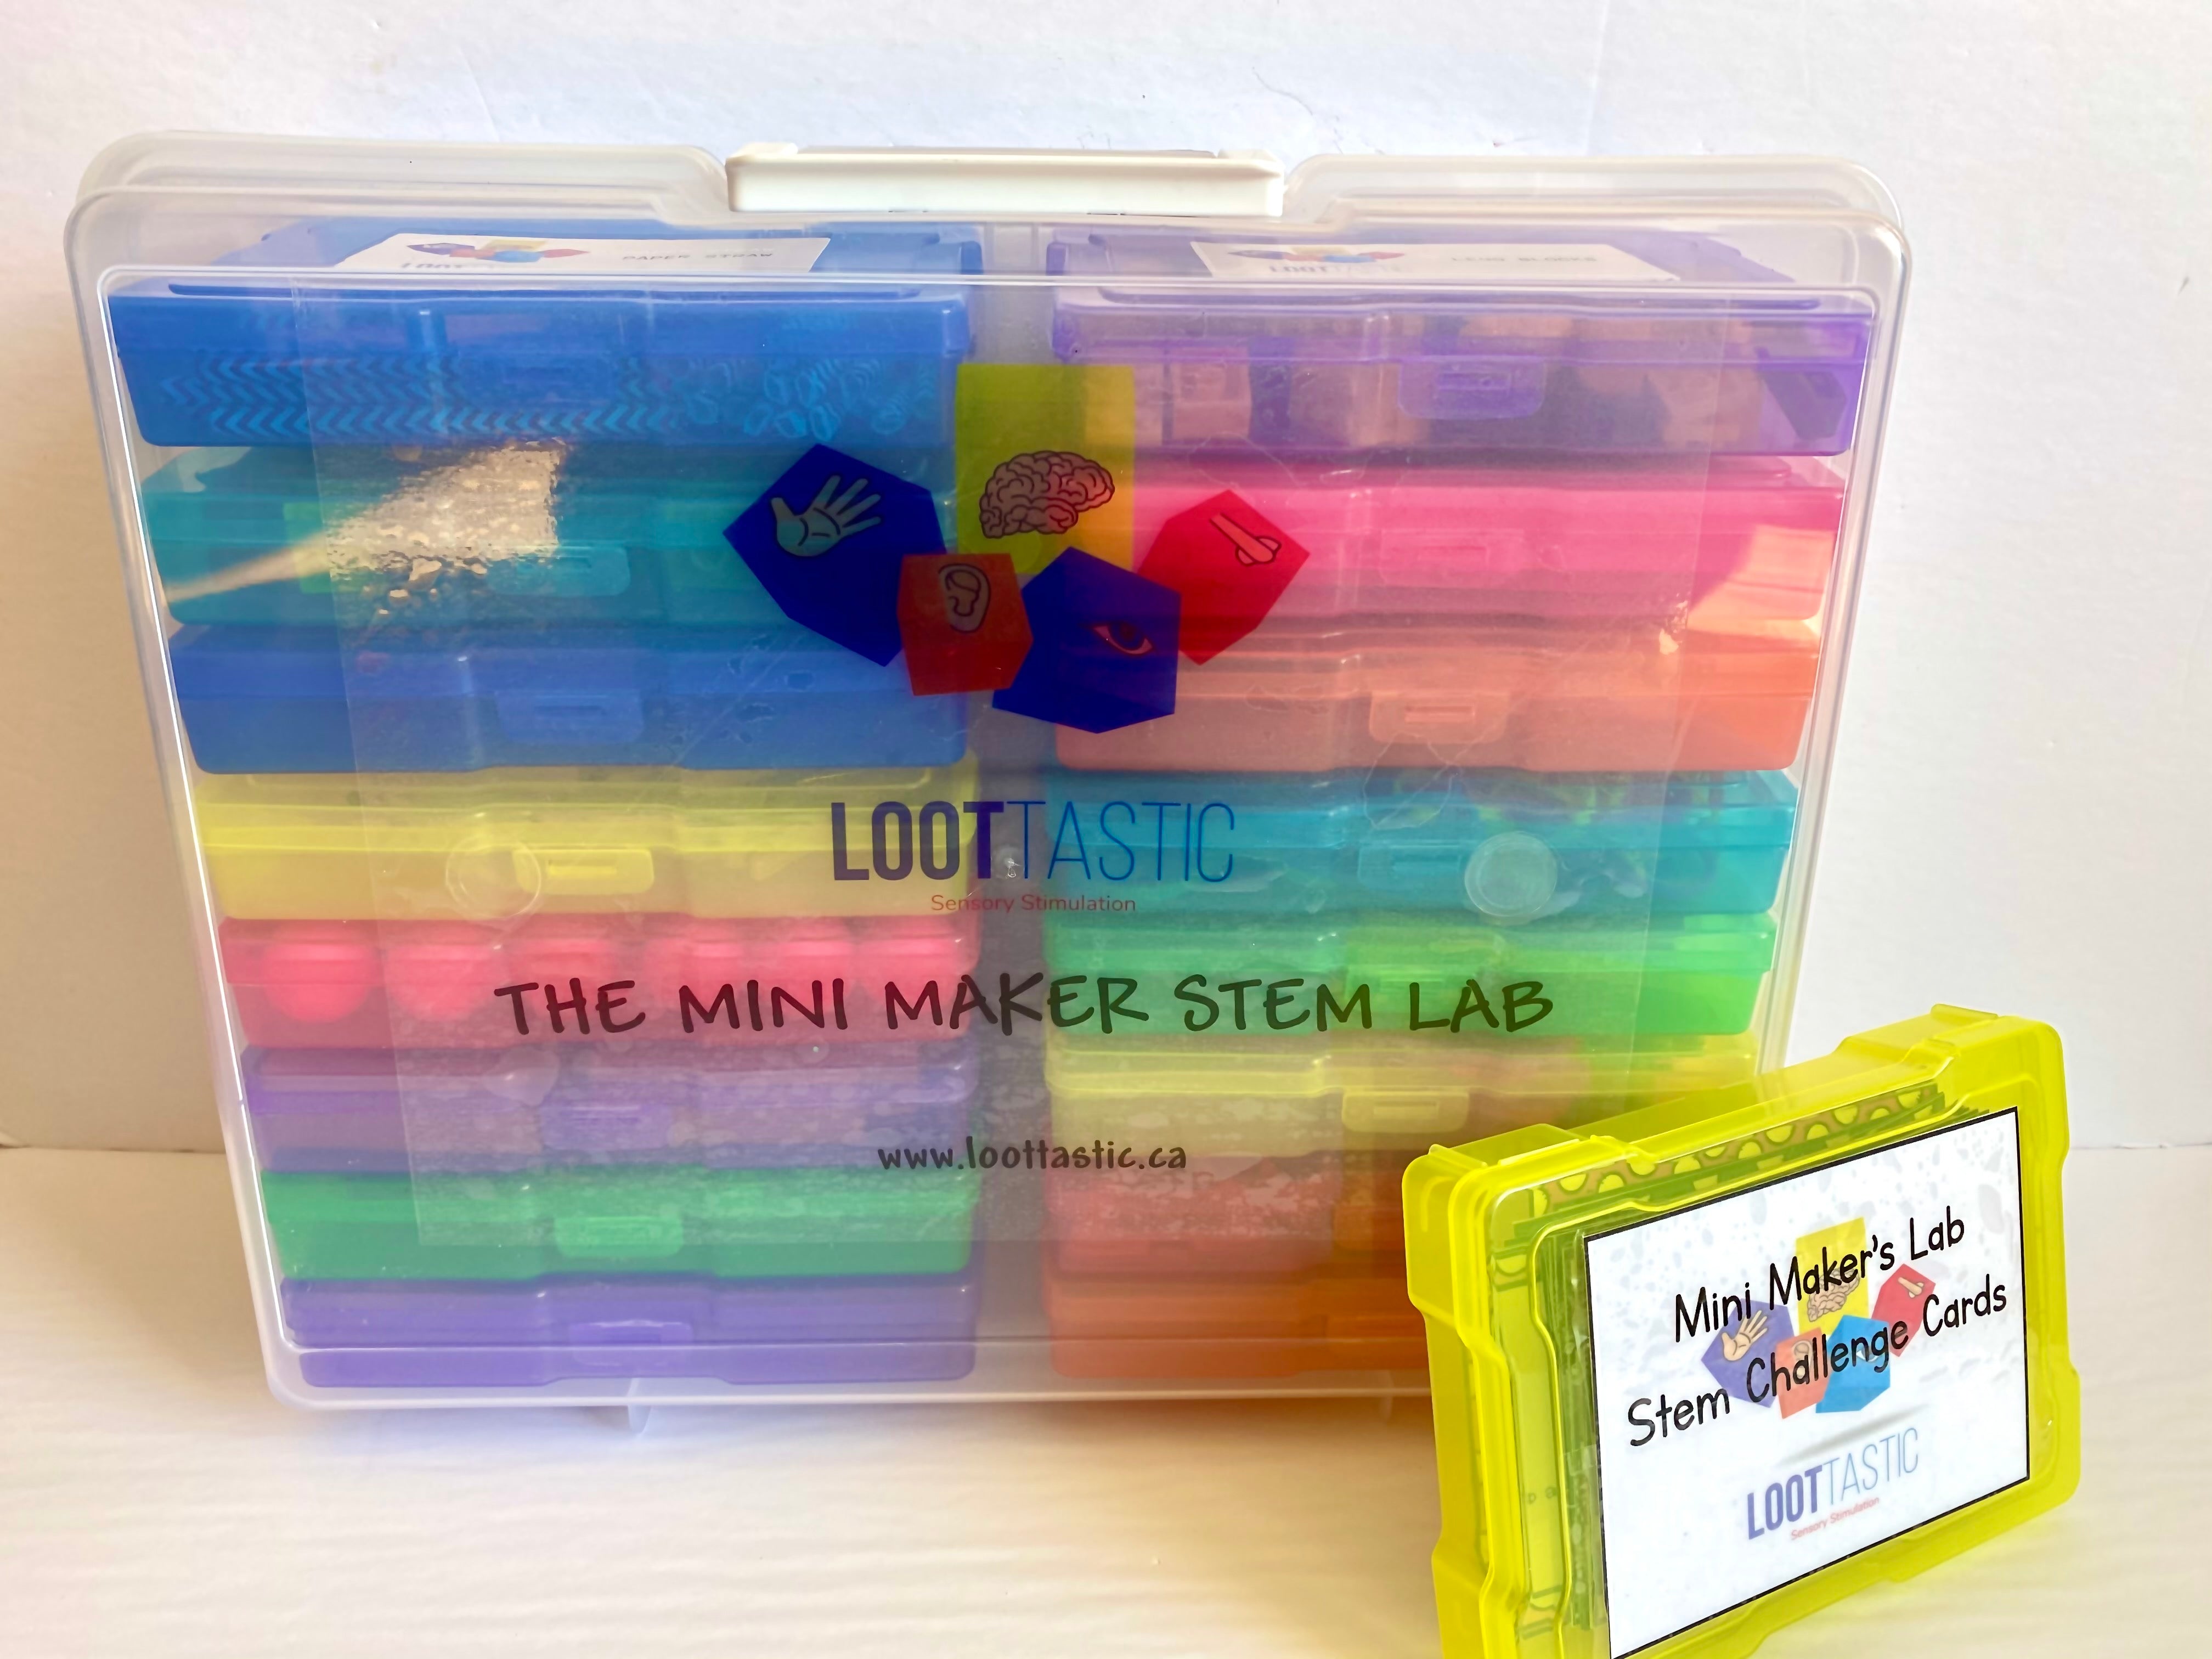 The Mini Maker STEM lab